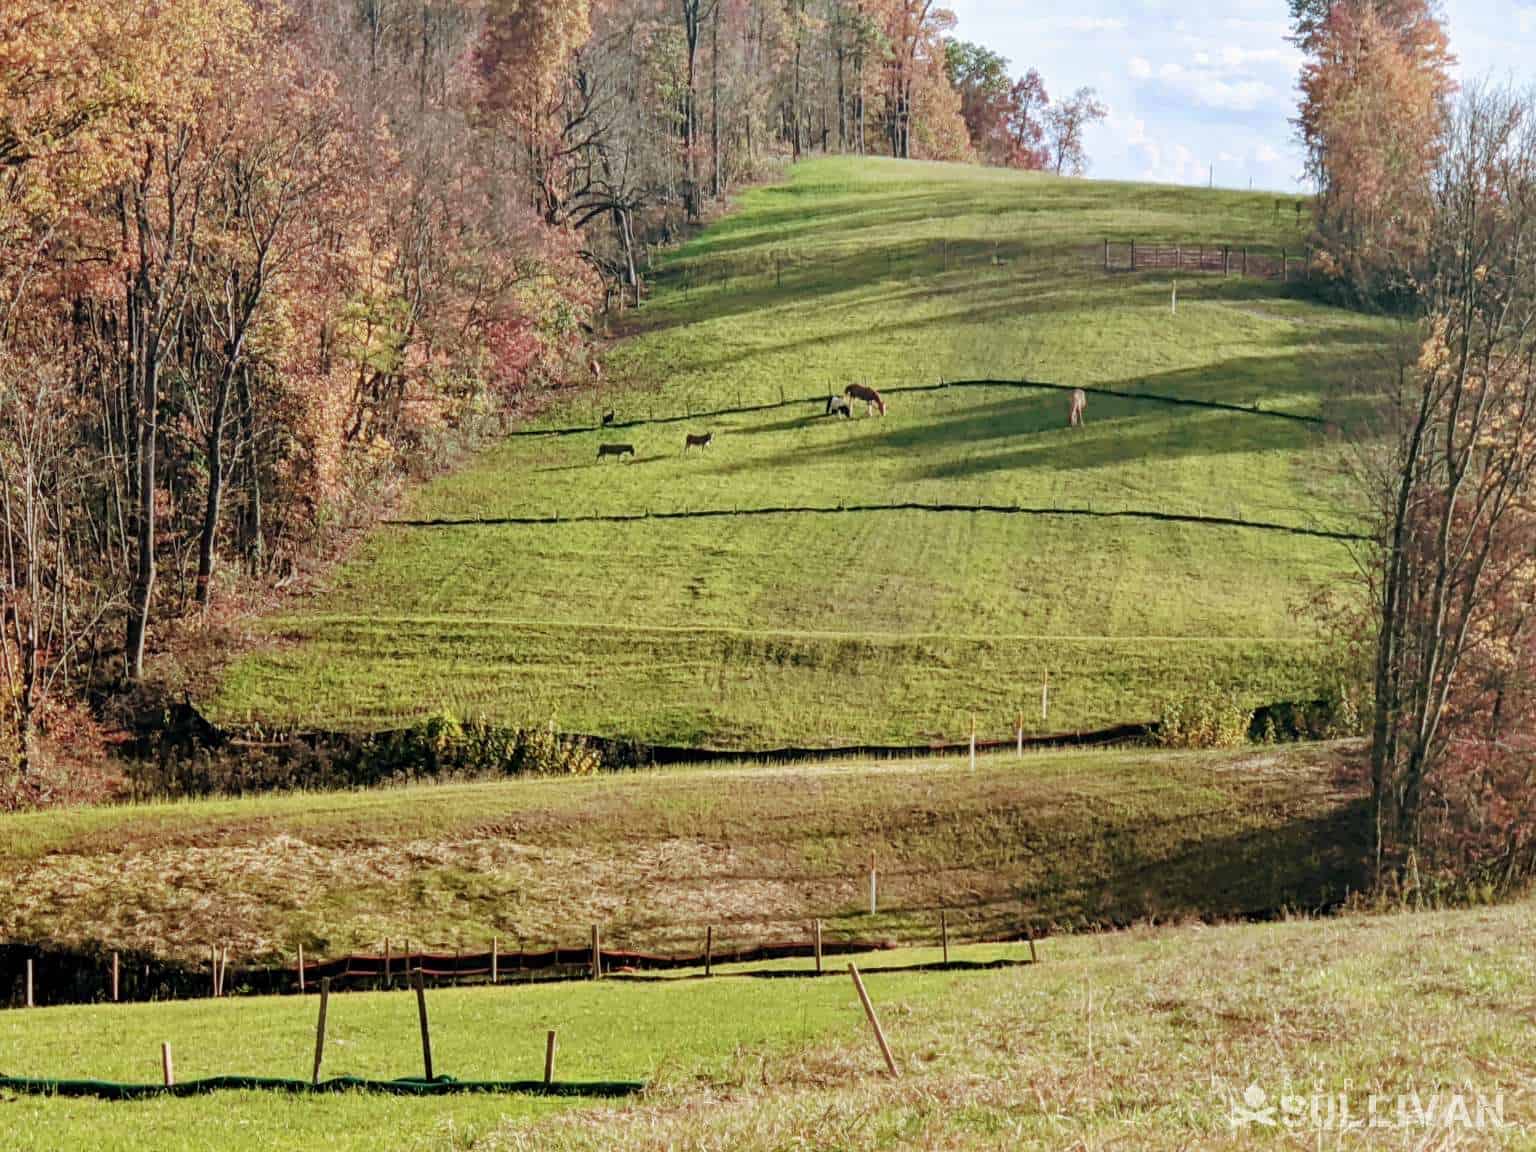 livestock on hill in Vinton County Ohio